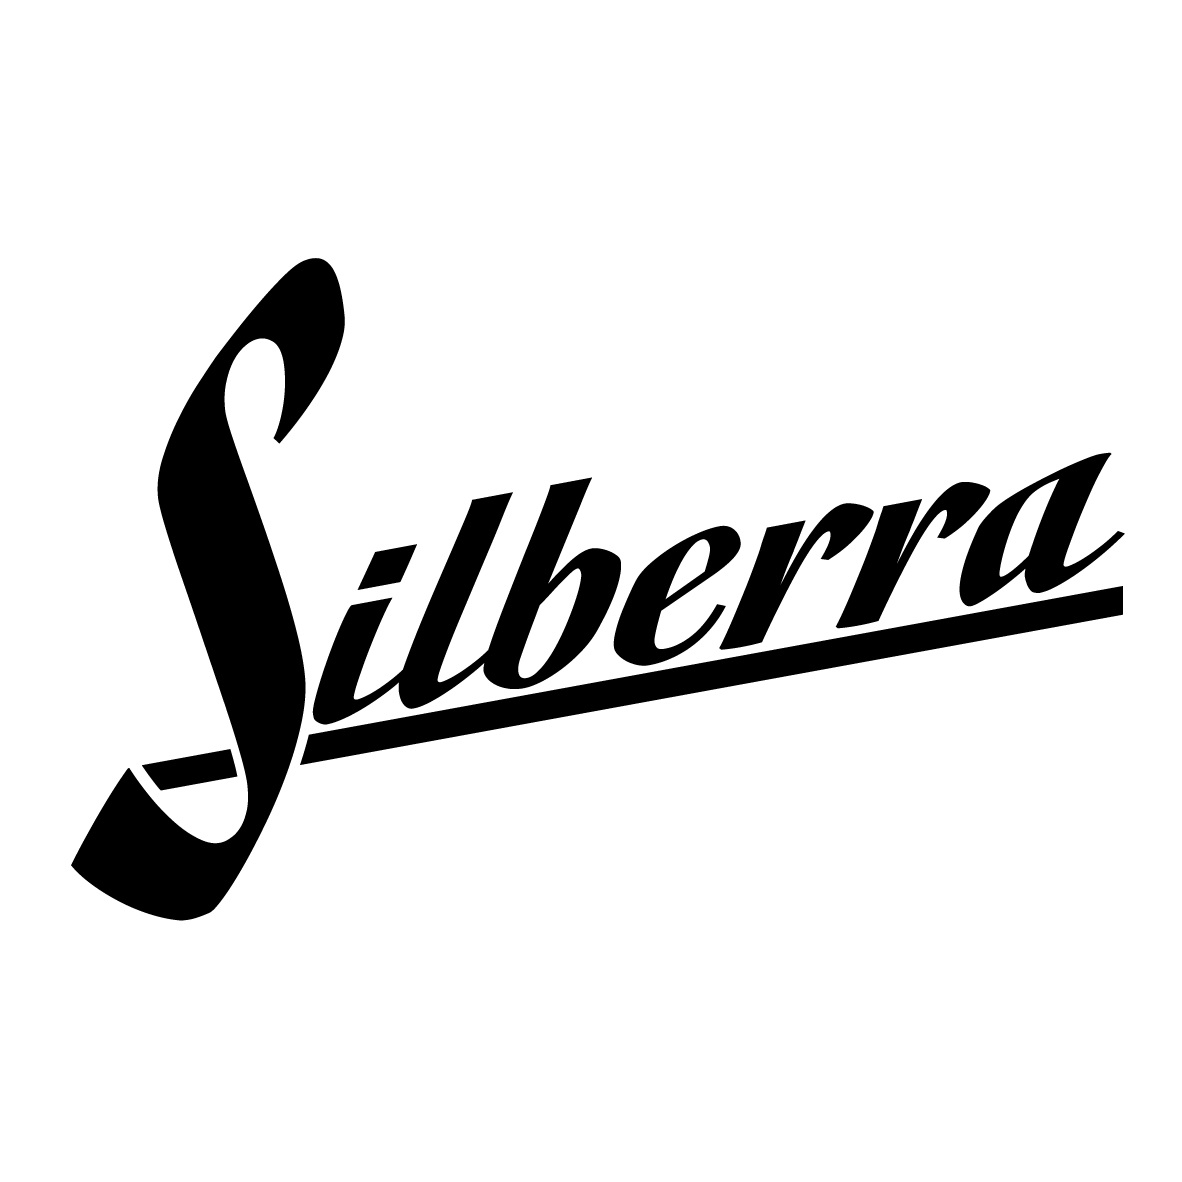 silberra-logo-011.jpg